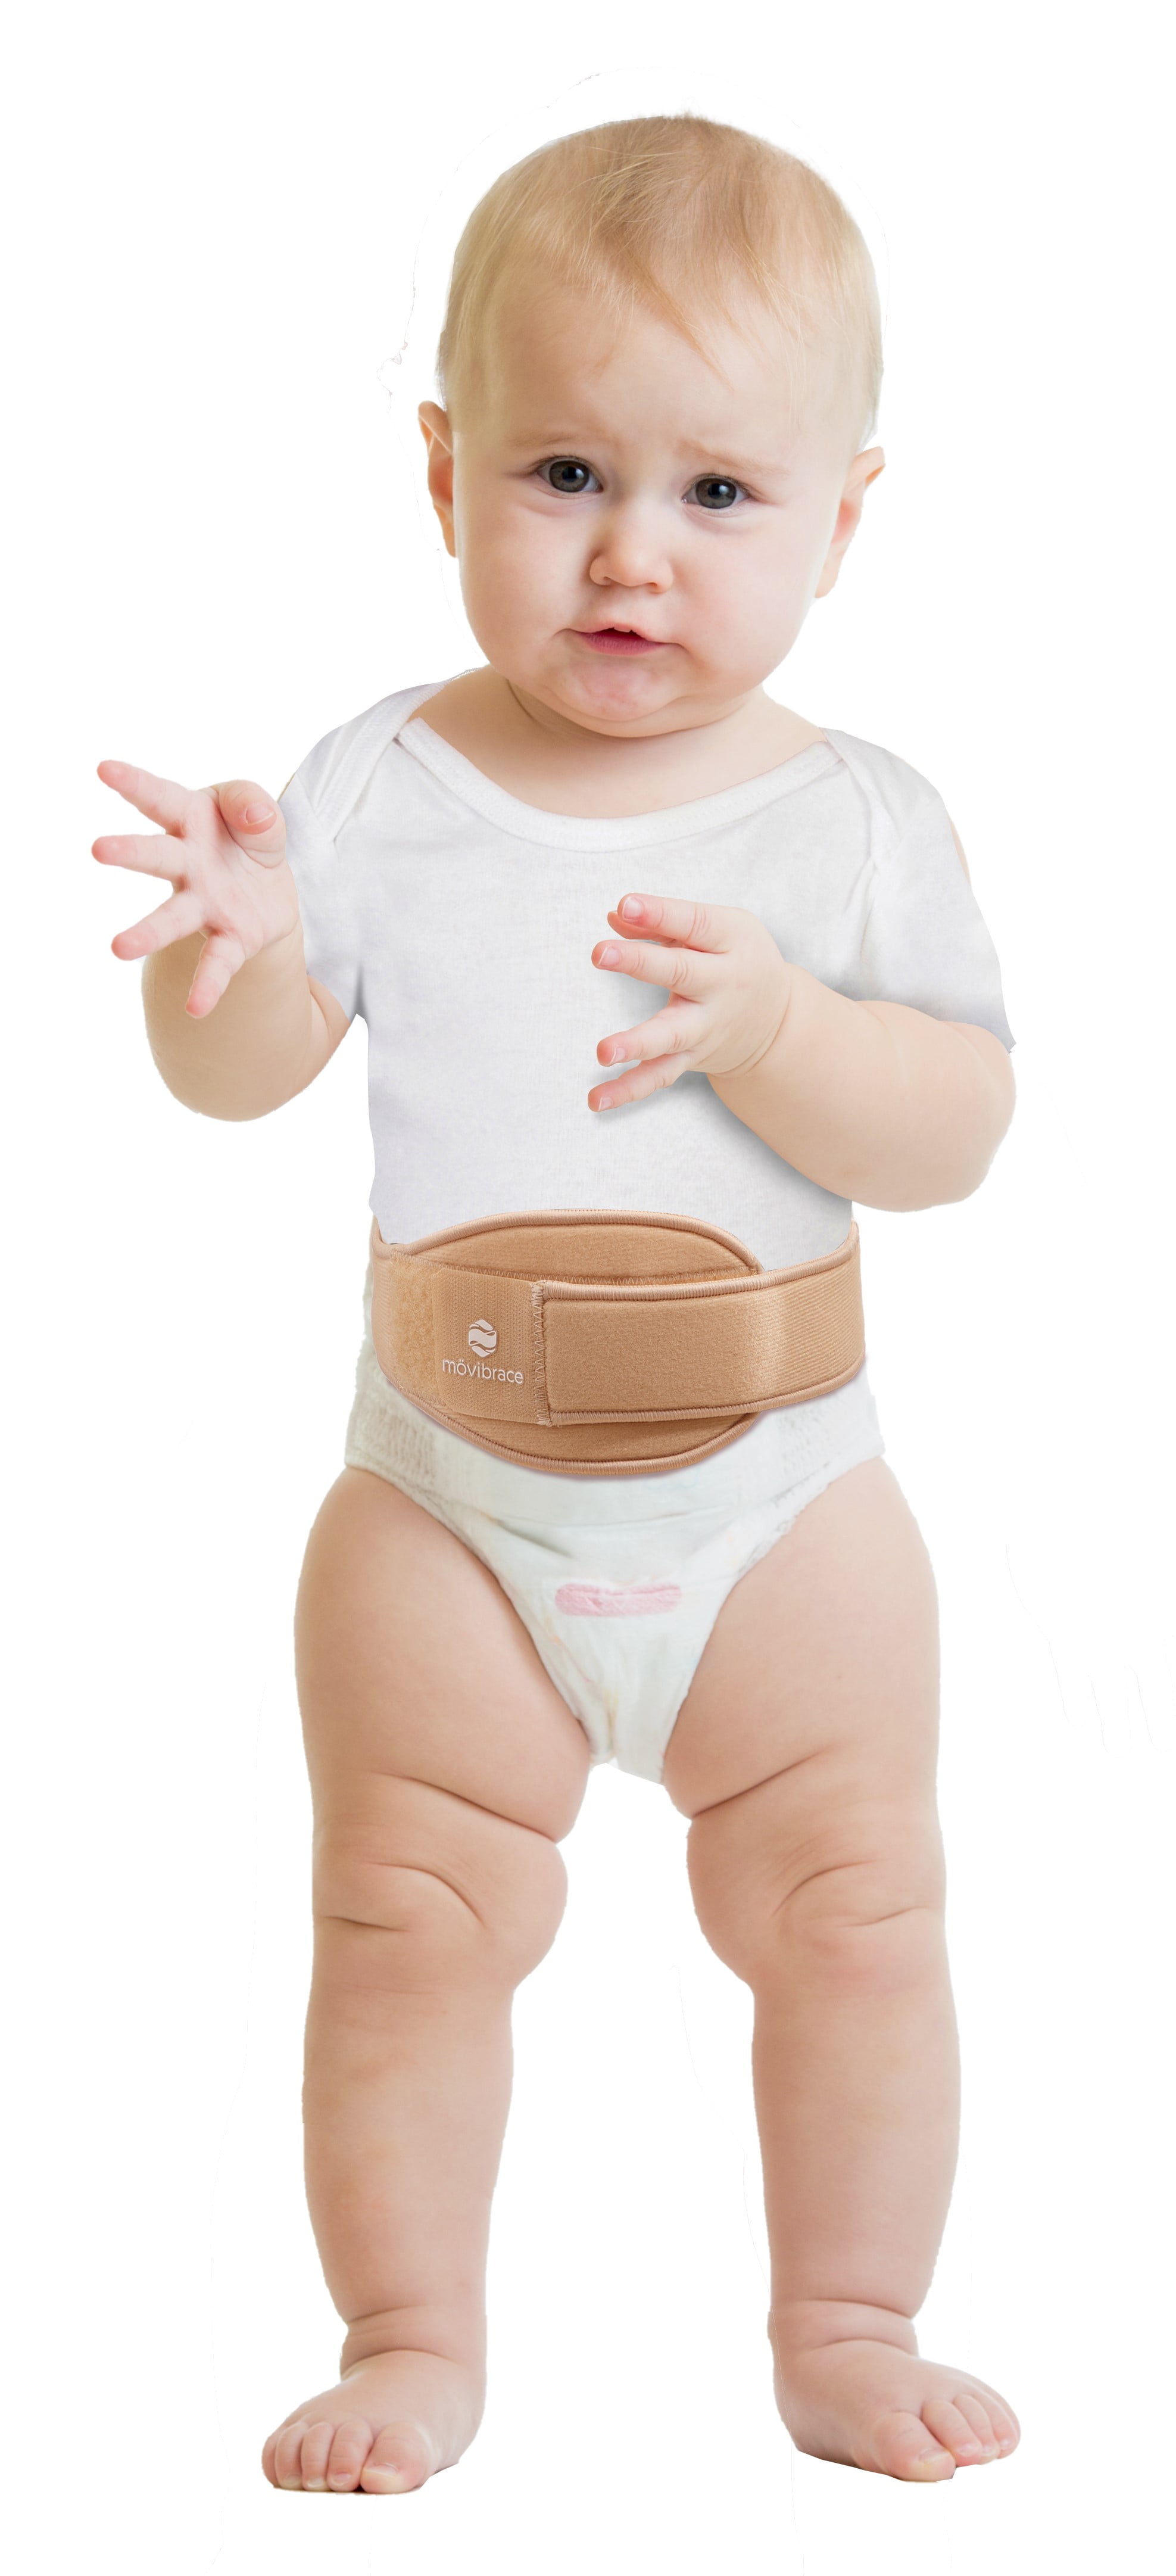 Movibrace Infant and Child Umbilical Hernia Brace - S